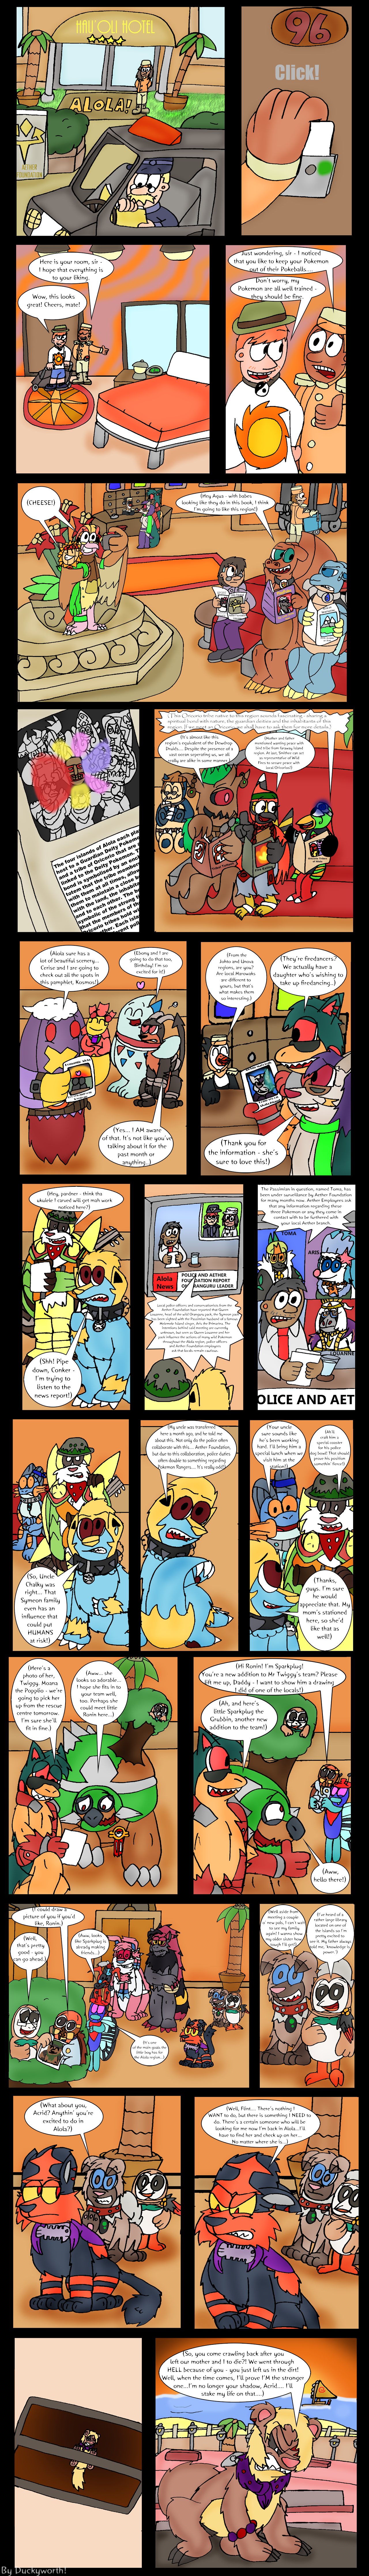 Alolan Pokemon Eggs - Part 3 by Tails19950 on DeviantArt